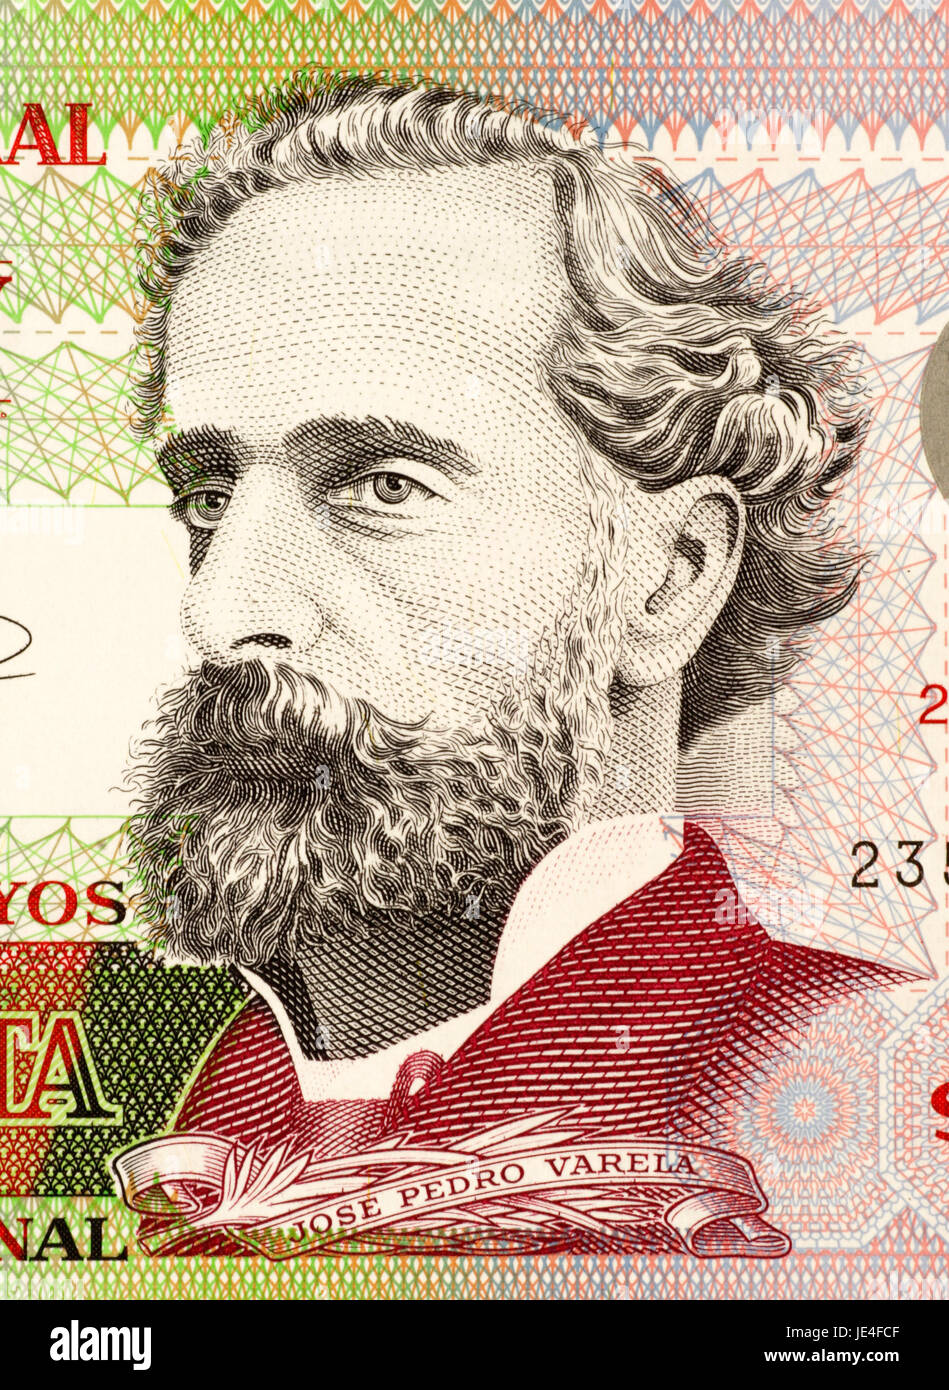 Jose Pedro Varela (1845-1879) on 50 Pesos 2008 Banknote from Uruguay. Uruguayan sociologist, journalist, politician and educator. Stock Photo